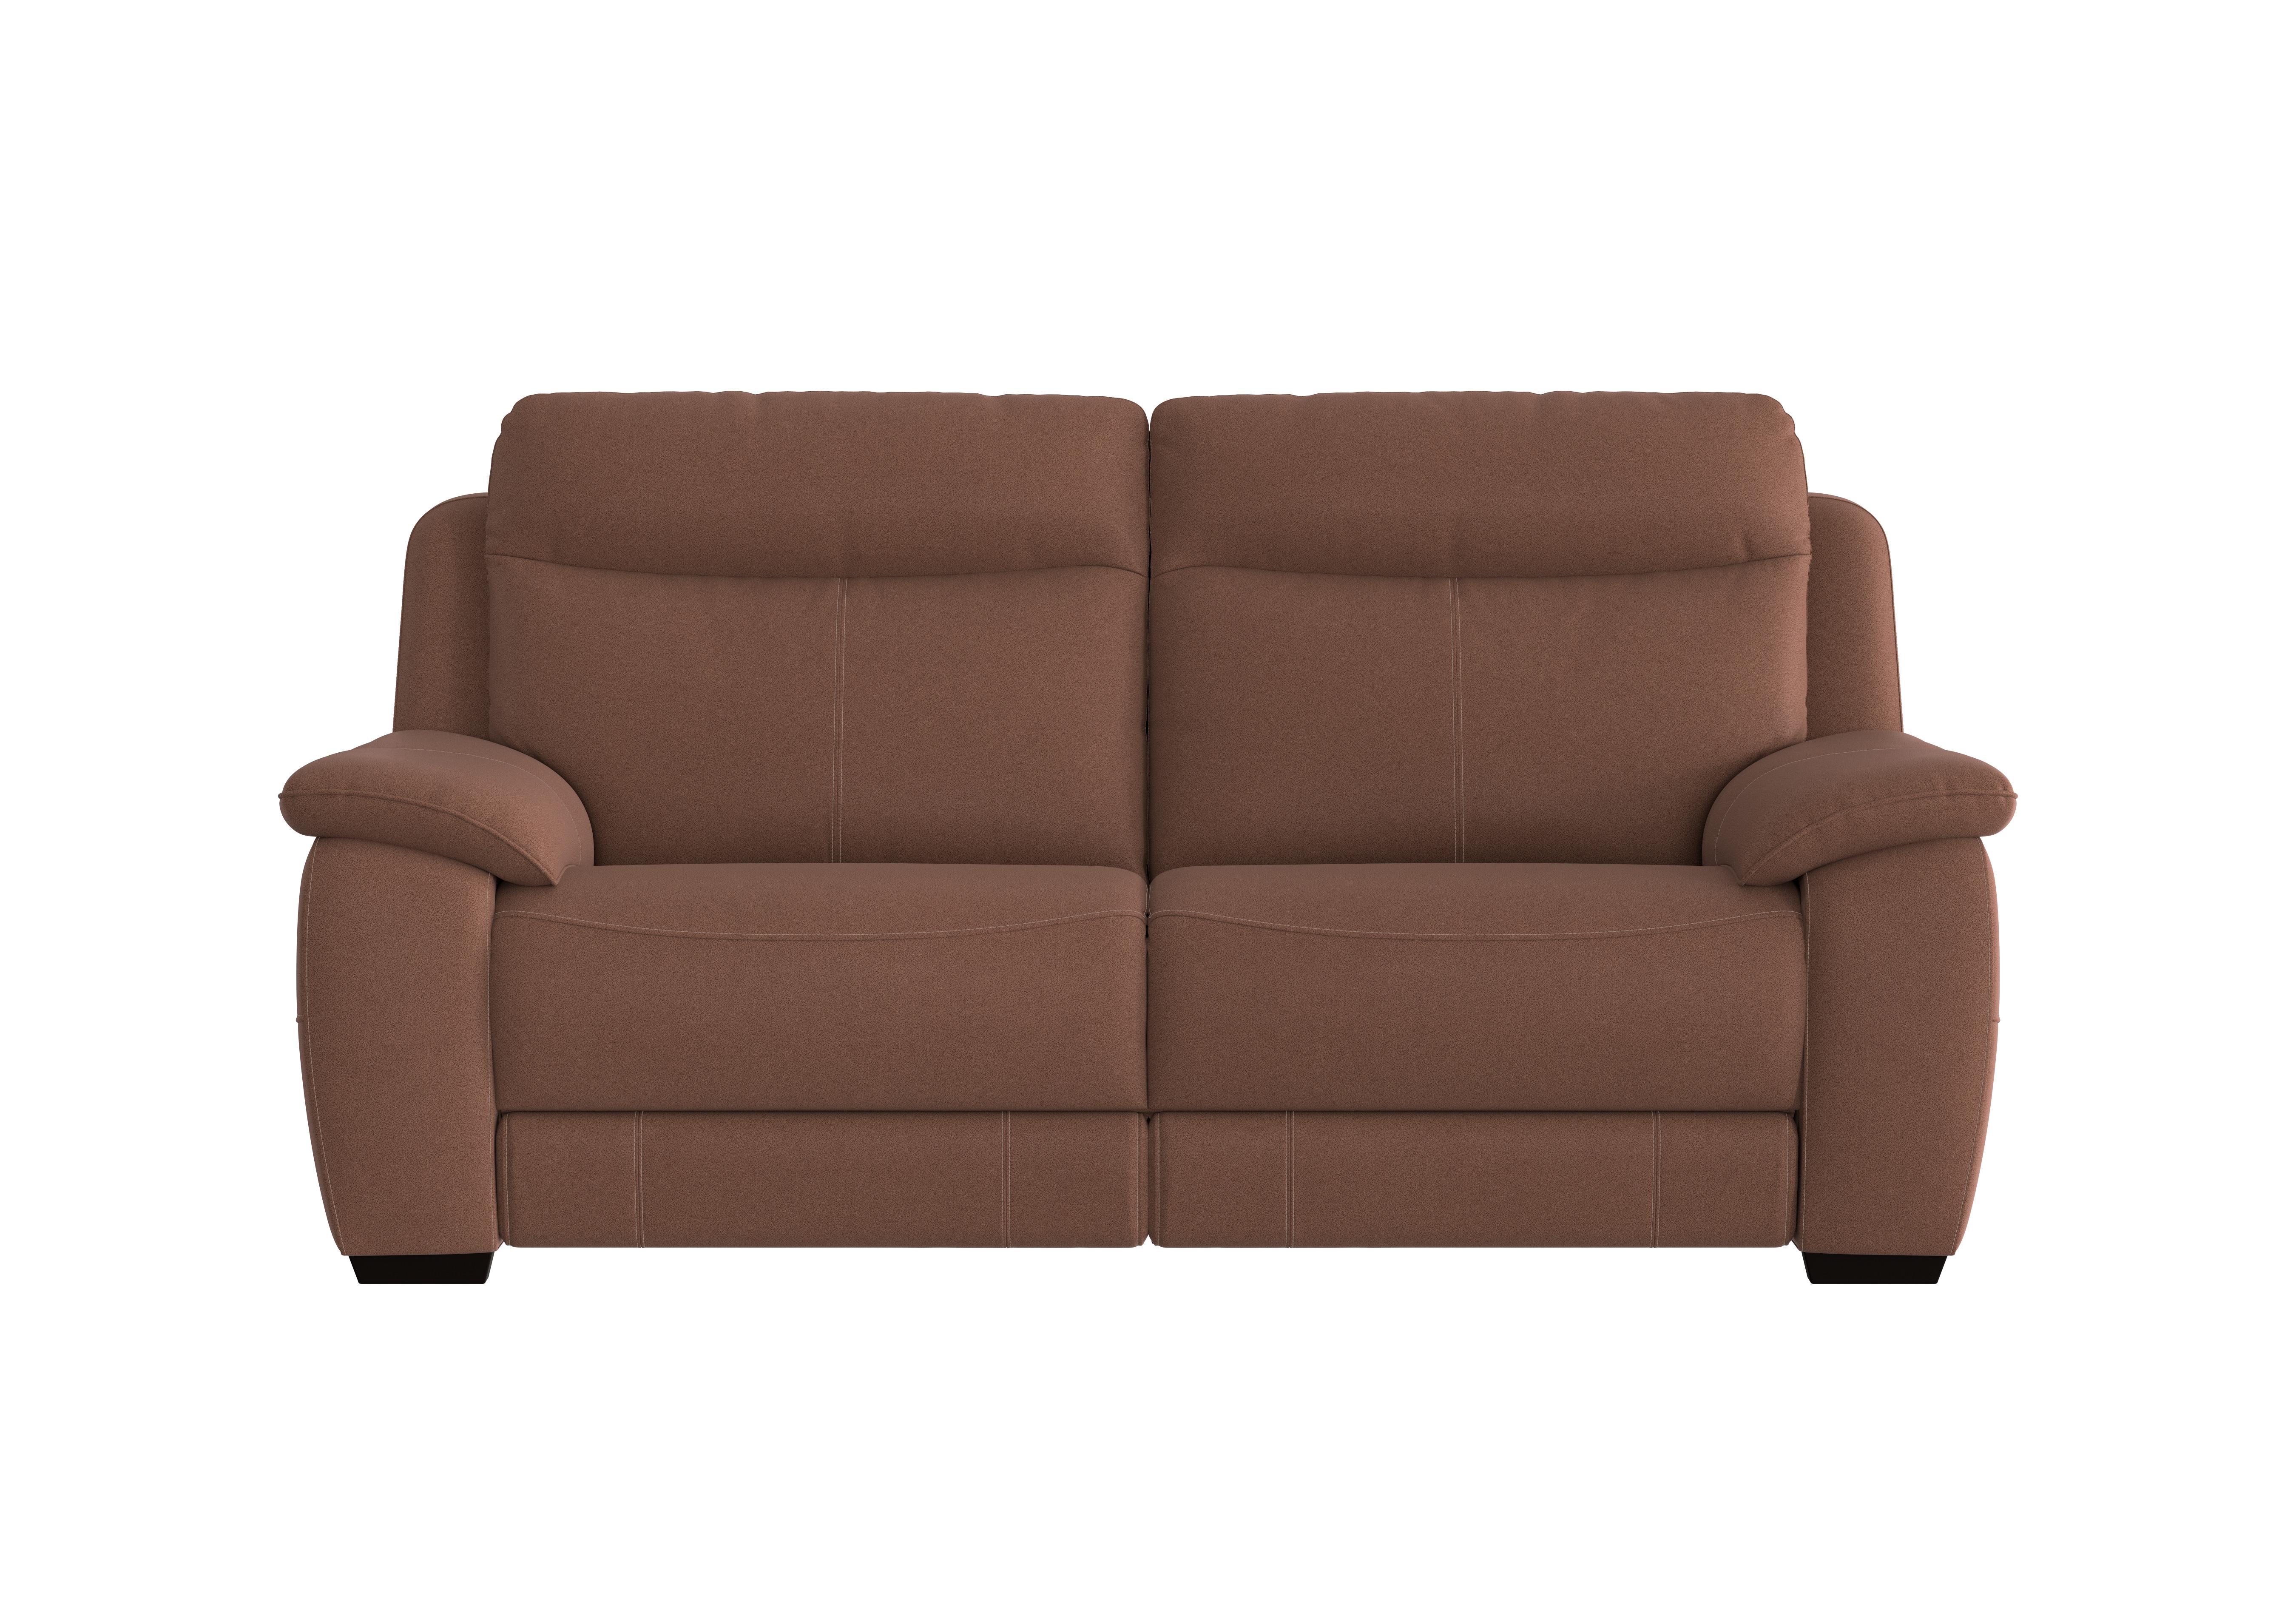 Starlight Express 3 Seater Fabric Sofa in Bfa-Blj-R05 Hazelnut on Furniture Village